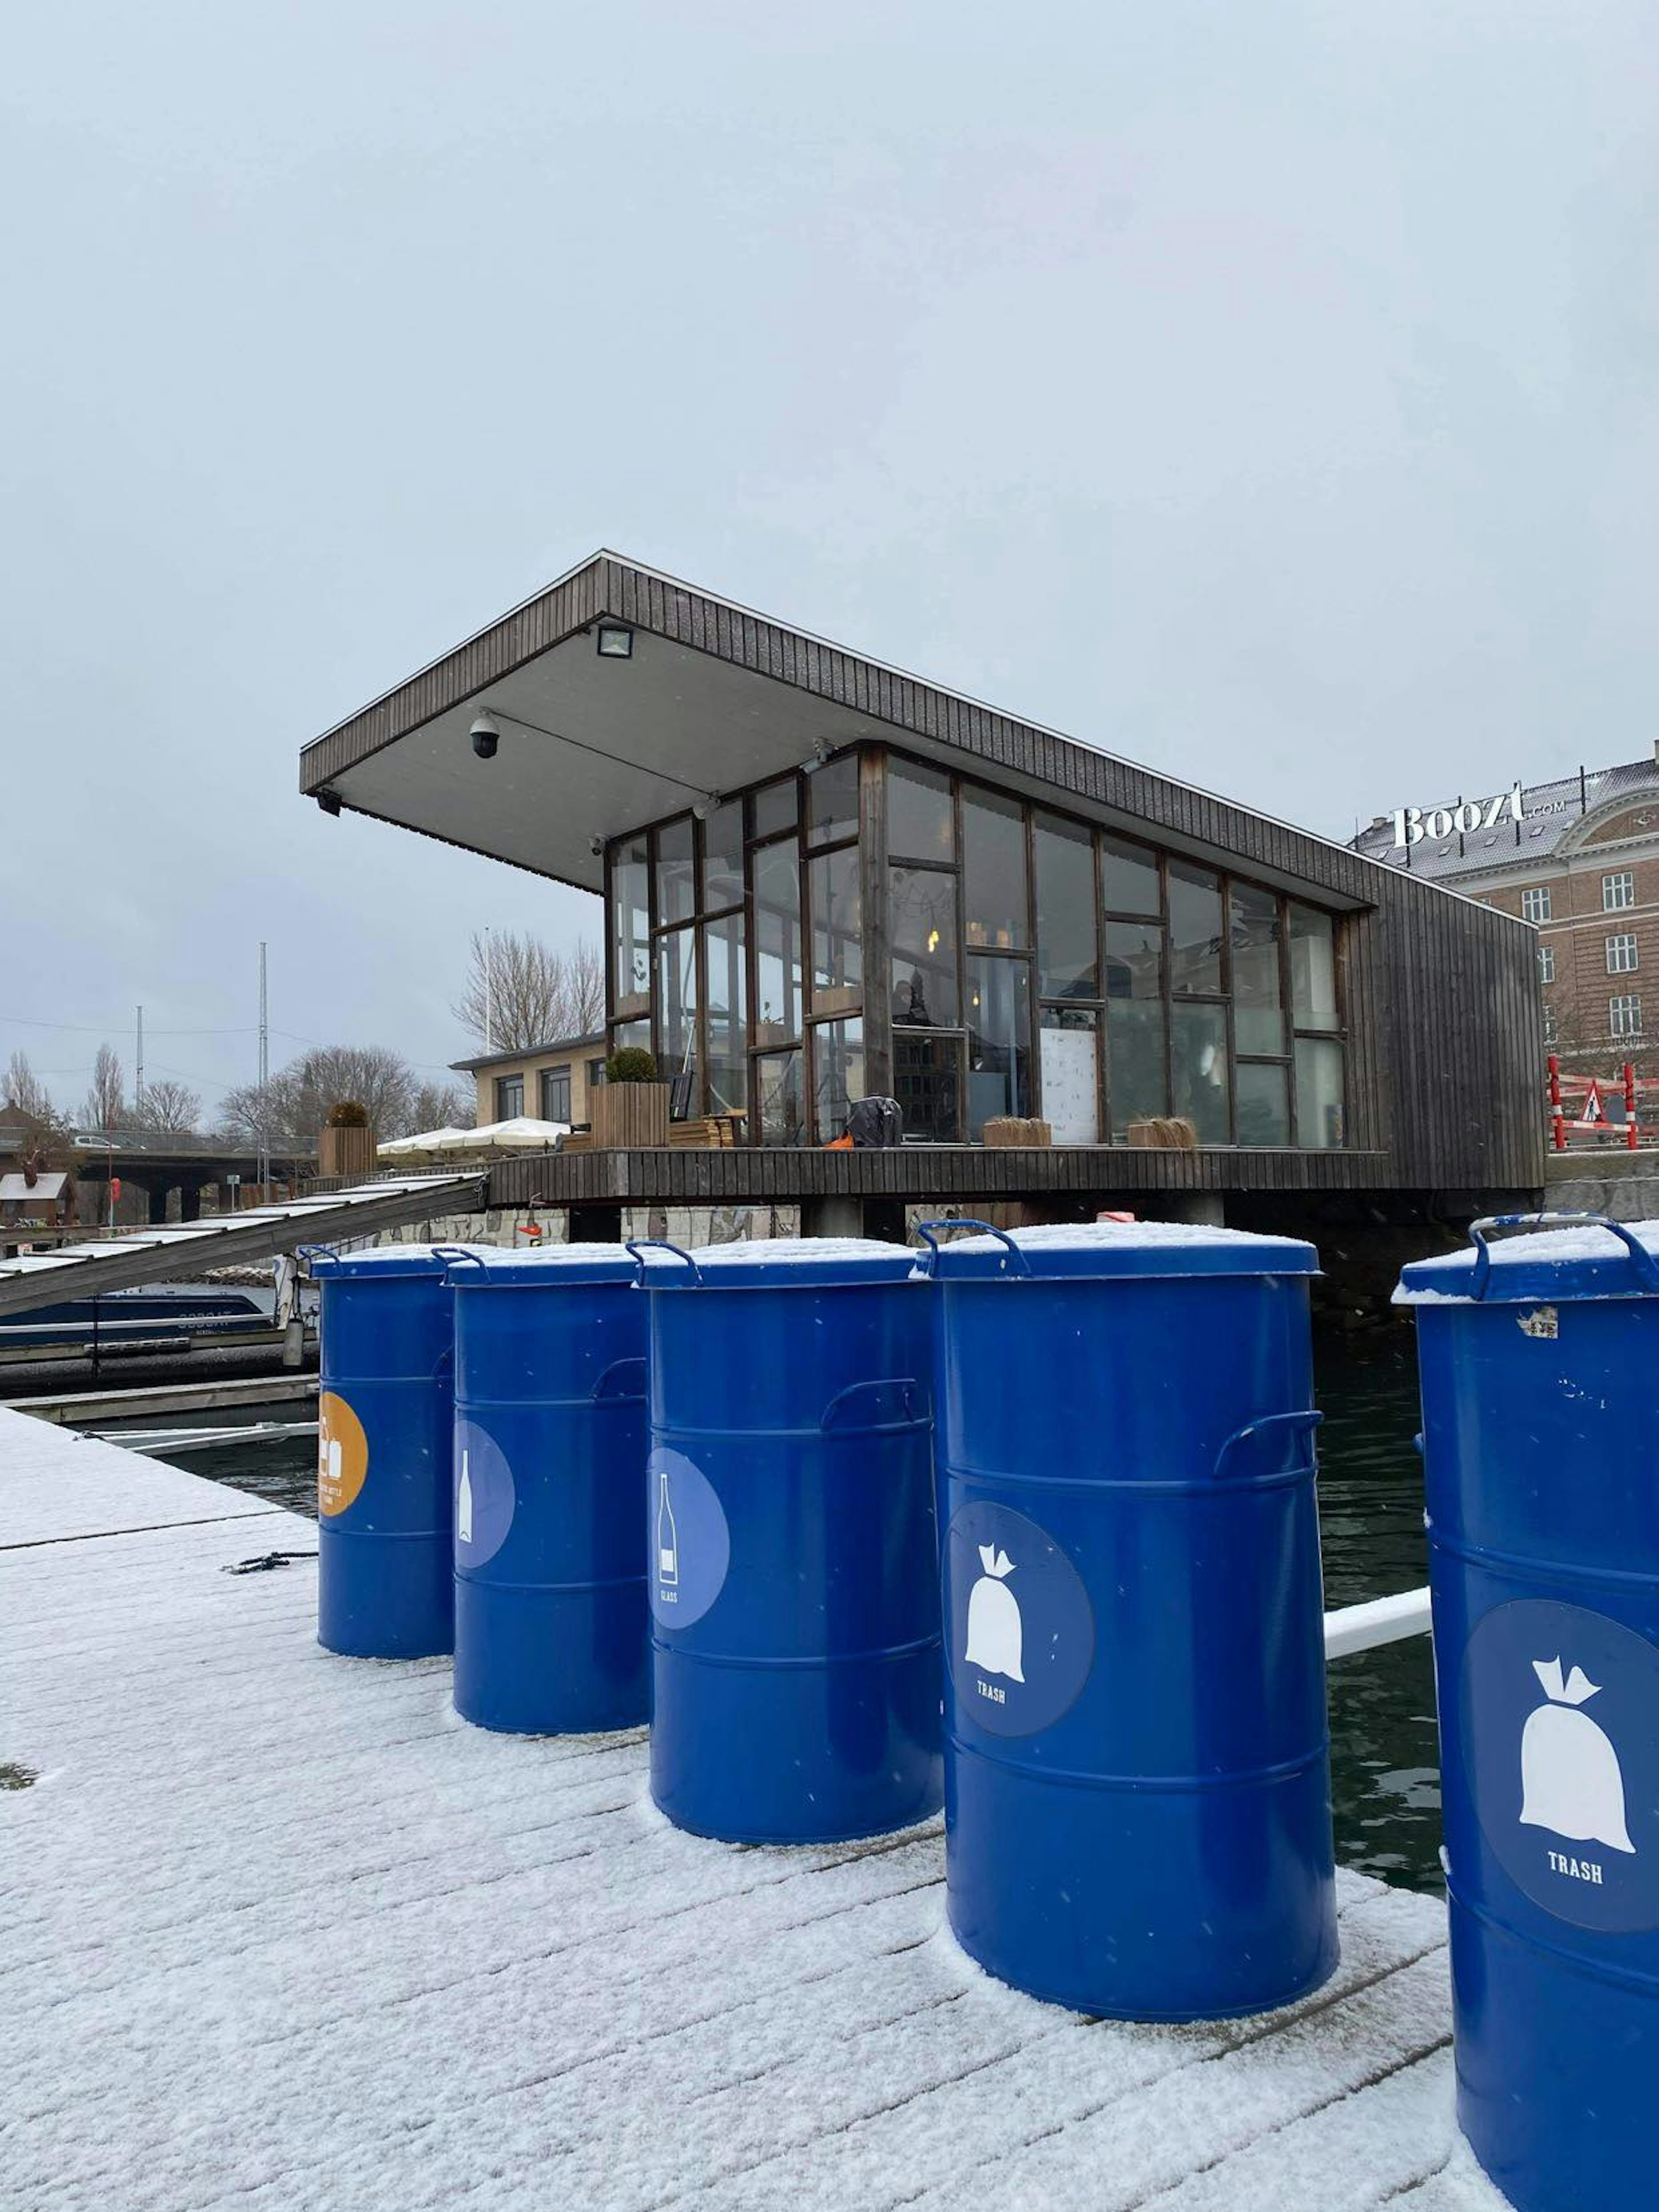 Copenhagen Harbour Winter Trash Sorting Sustainability Clean Water Islands Brygge Boat Rental GoBoat